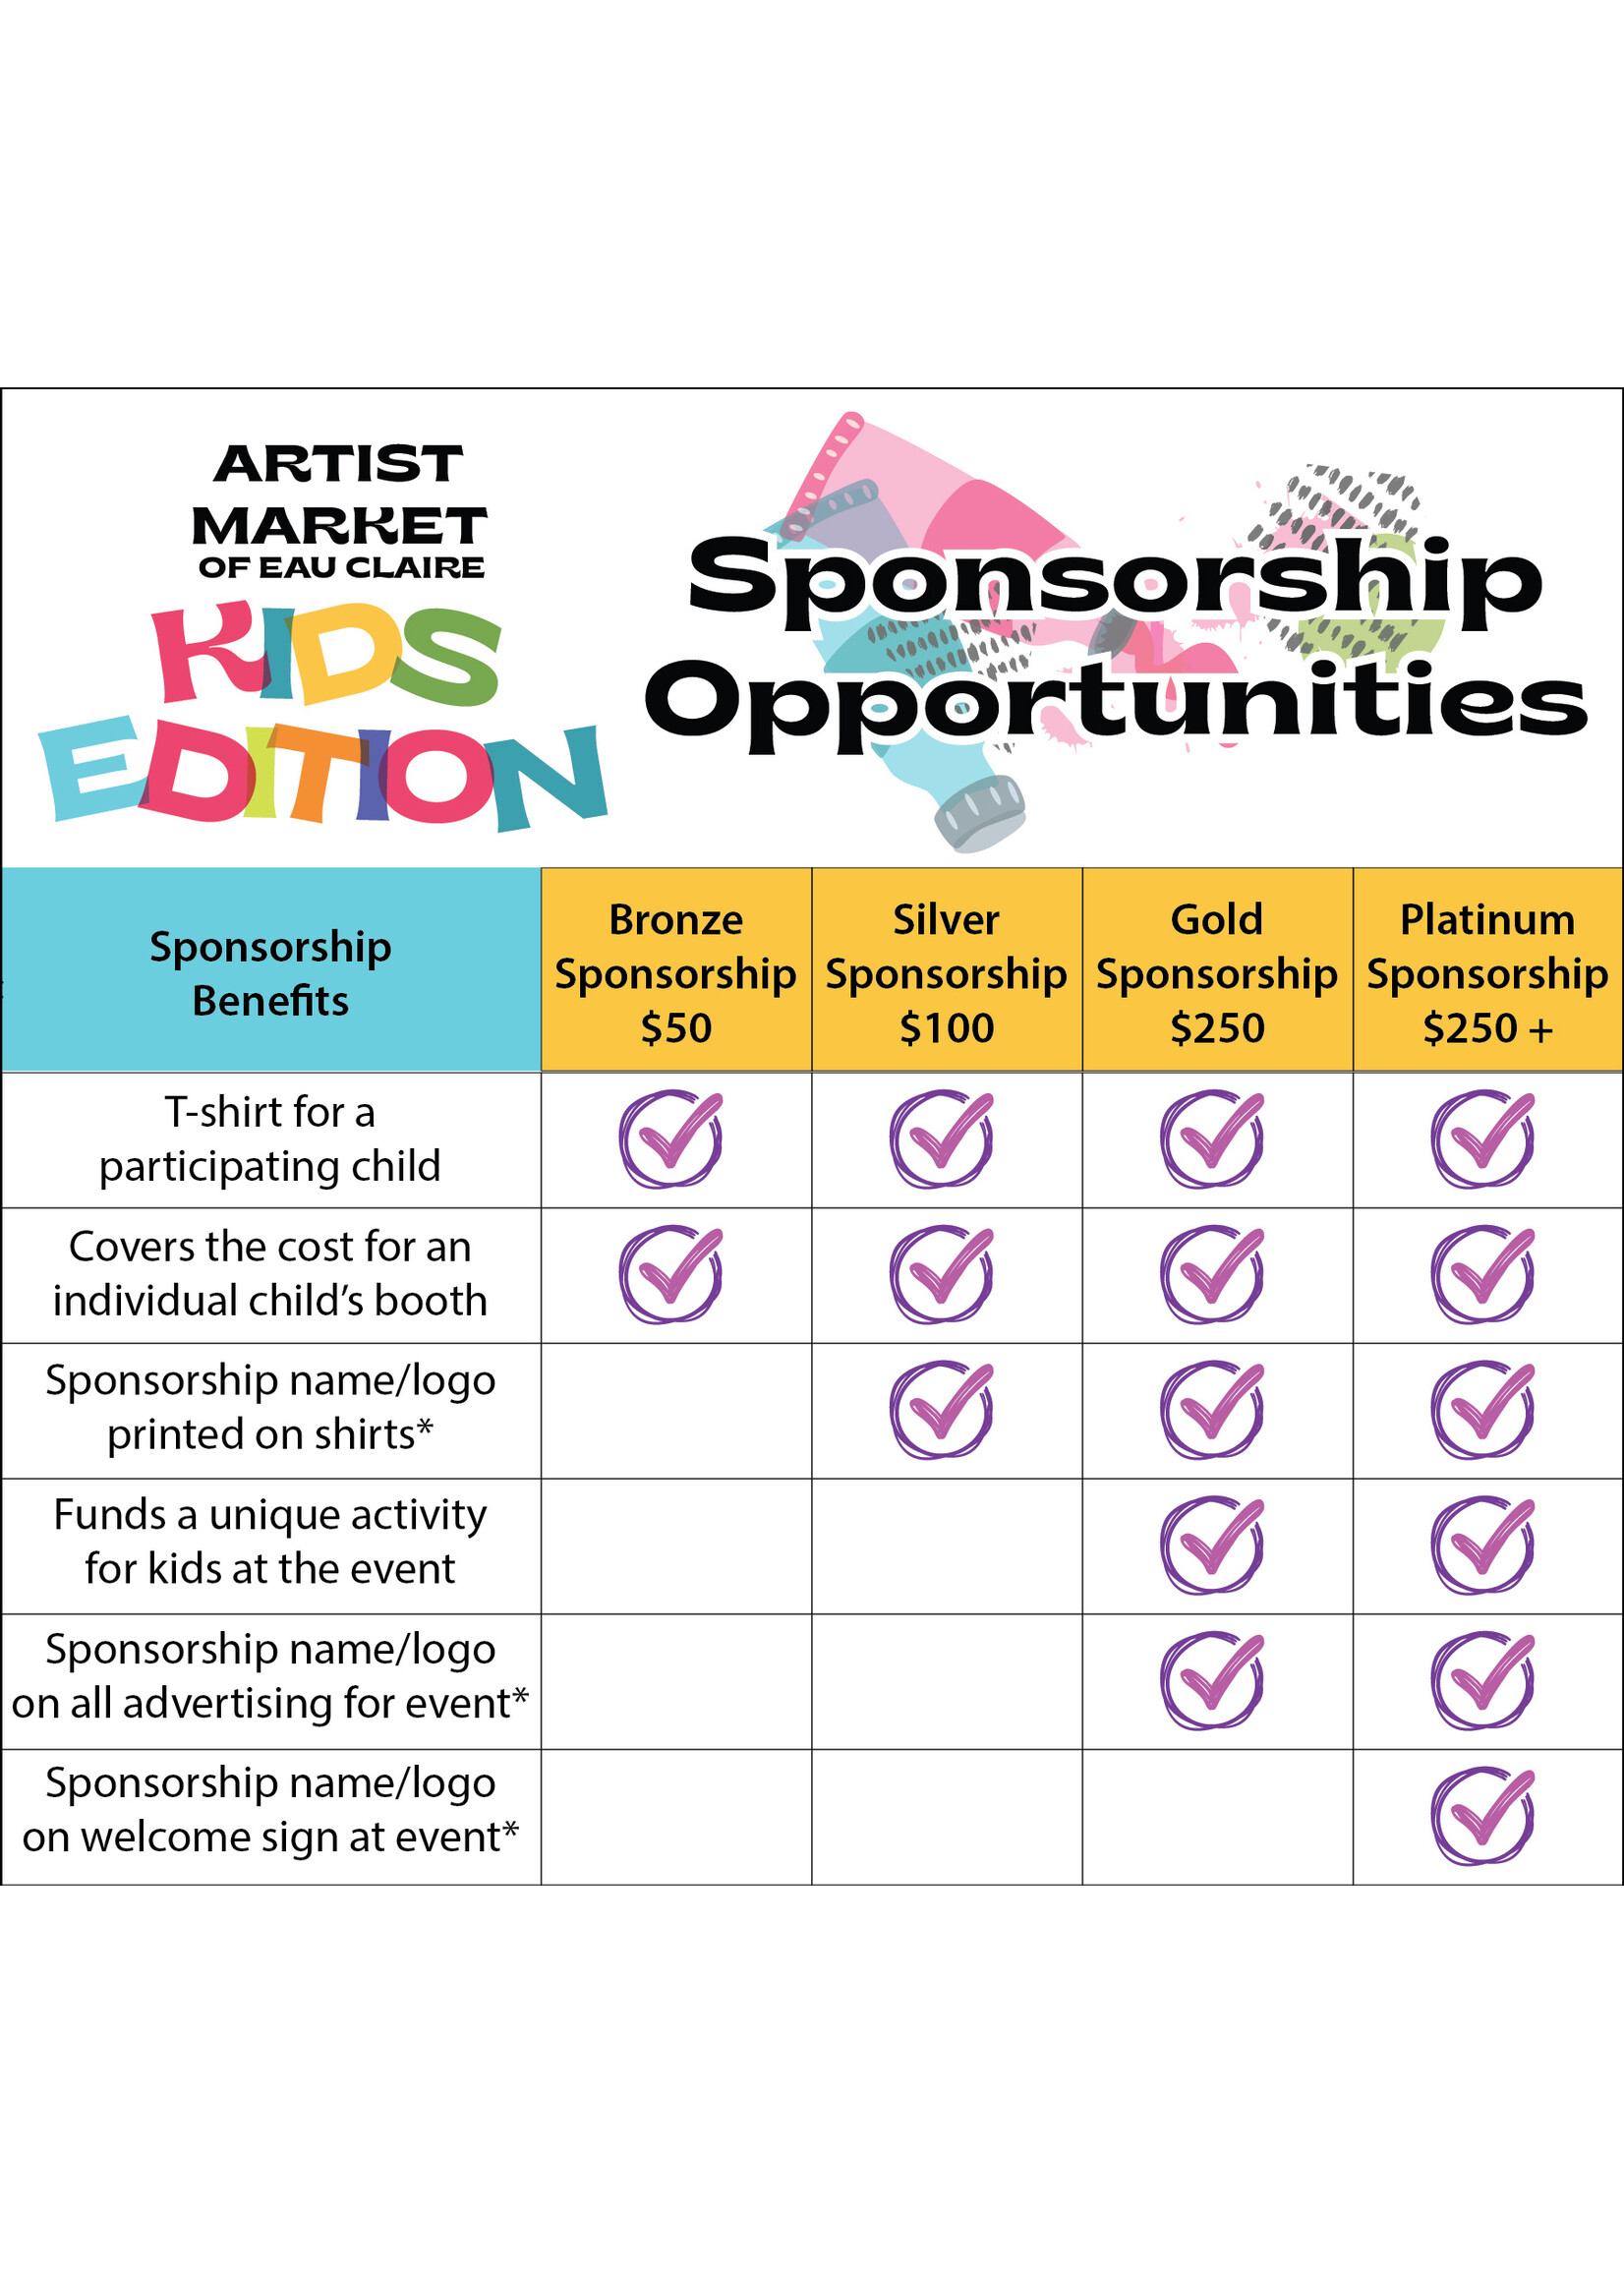 Artist Market: Kids Edition Sponsorships